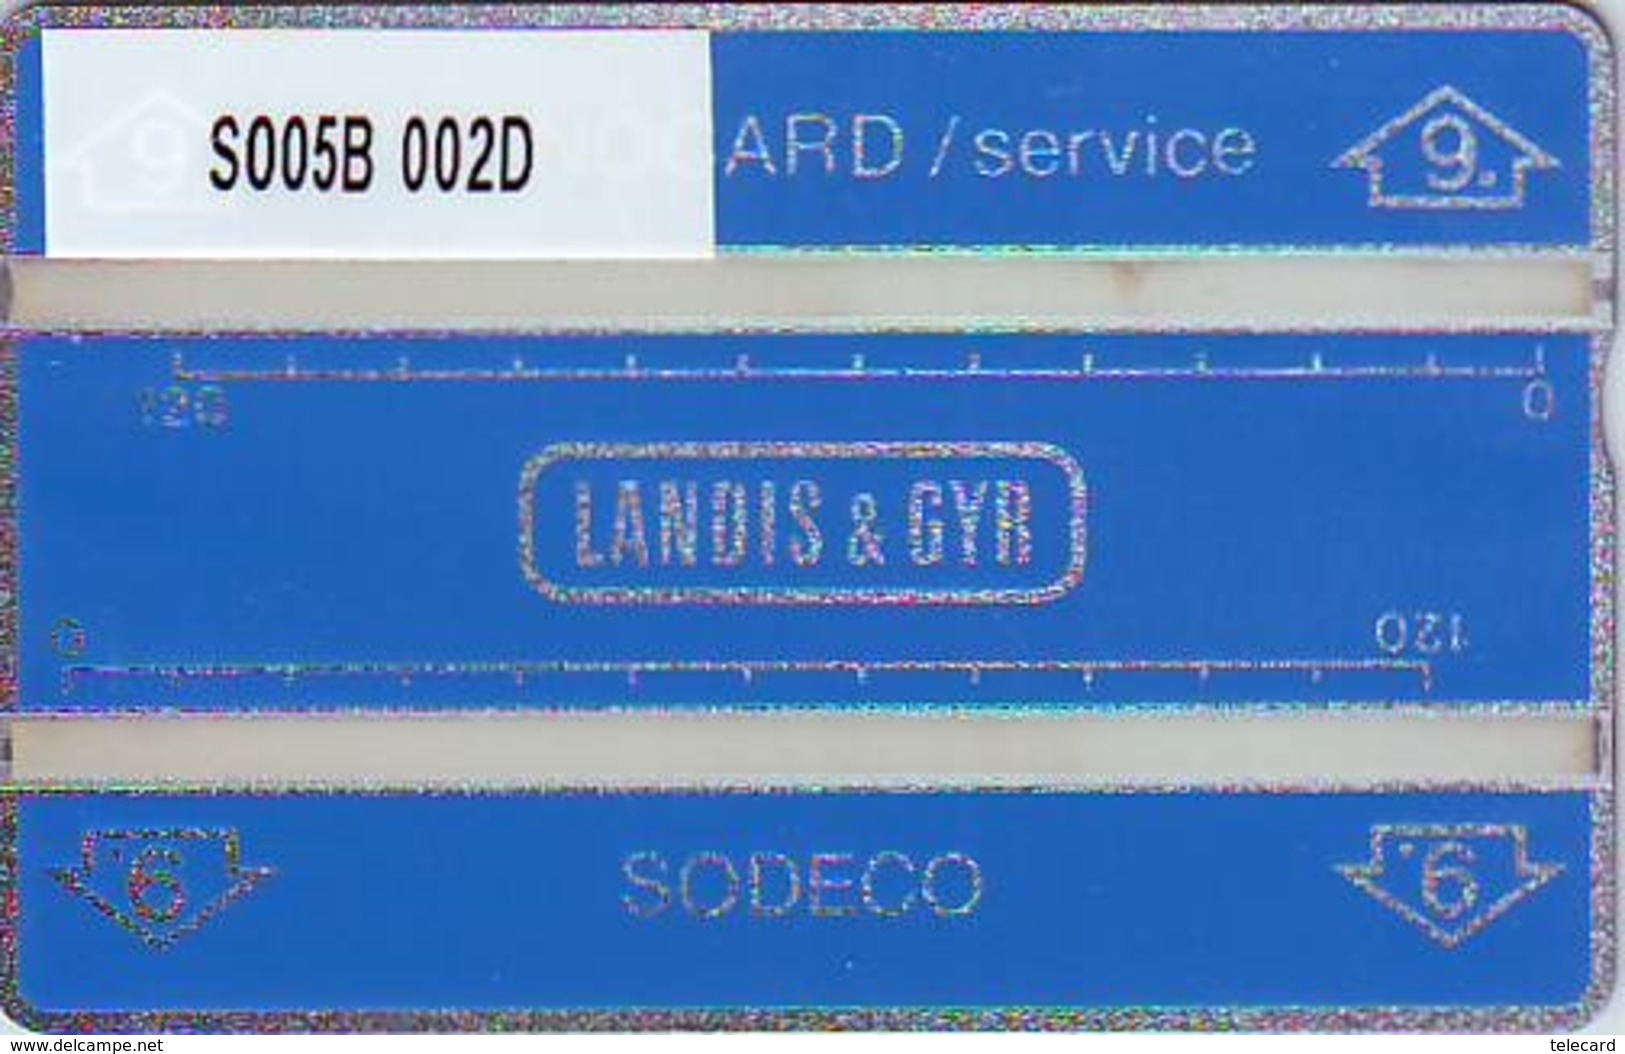 NEDERLAND LANDIS&GYR * SODECO * SERVICE CARD NR S005B 002D  "9"  3 Mm ONGEBRUIKT *  MINT - Test & Servizio